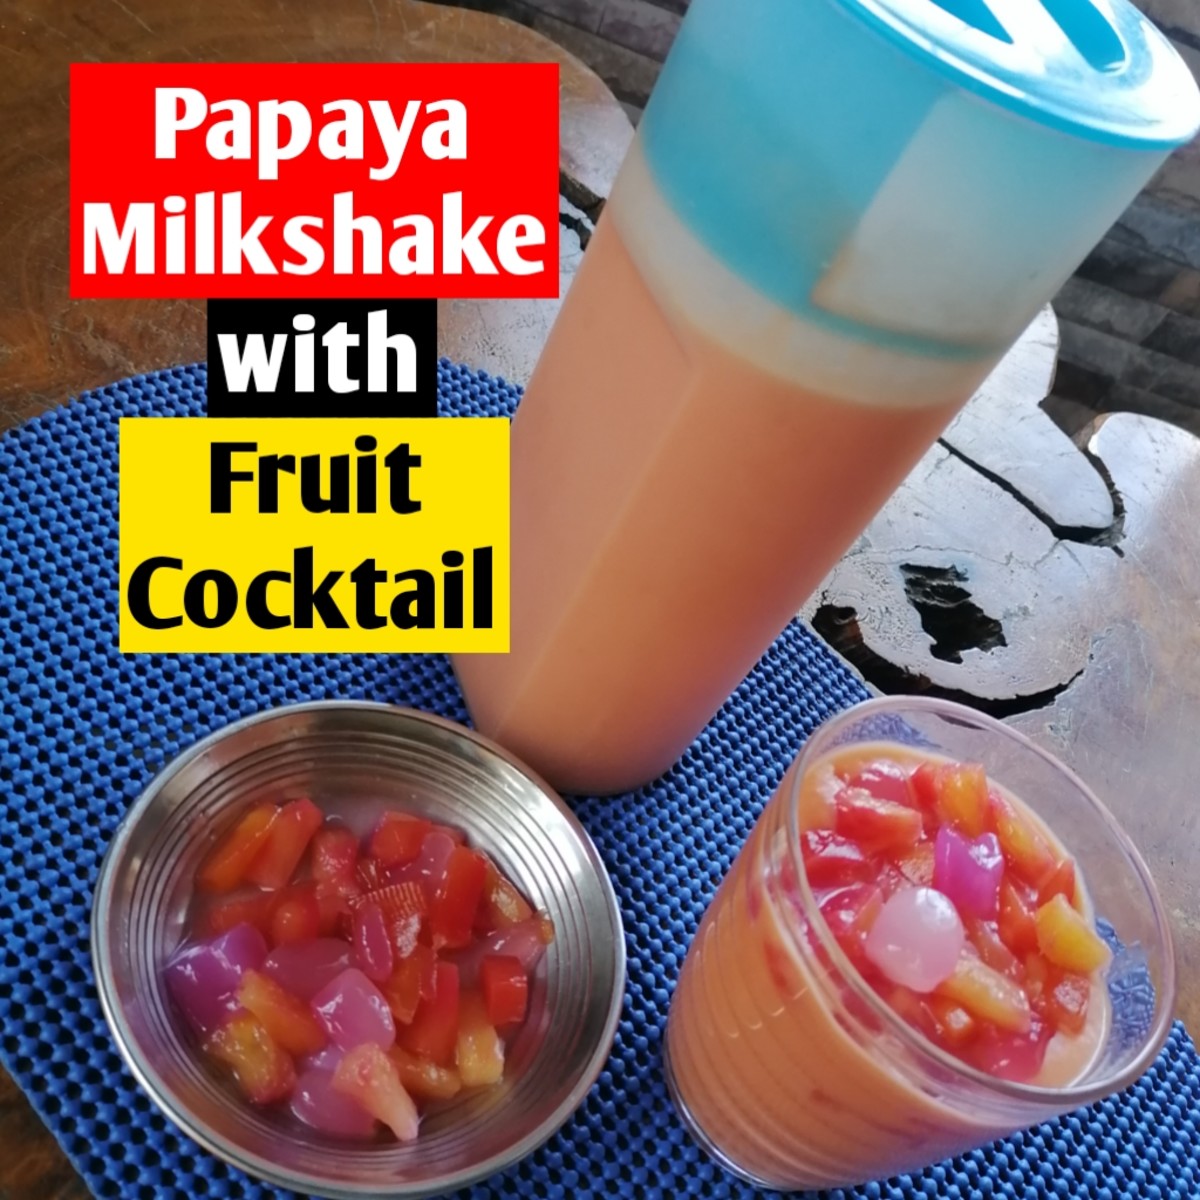 Fresh papaya milkshake with fruit cocktail